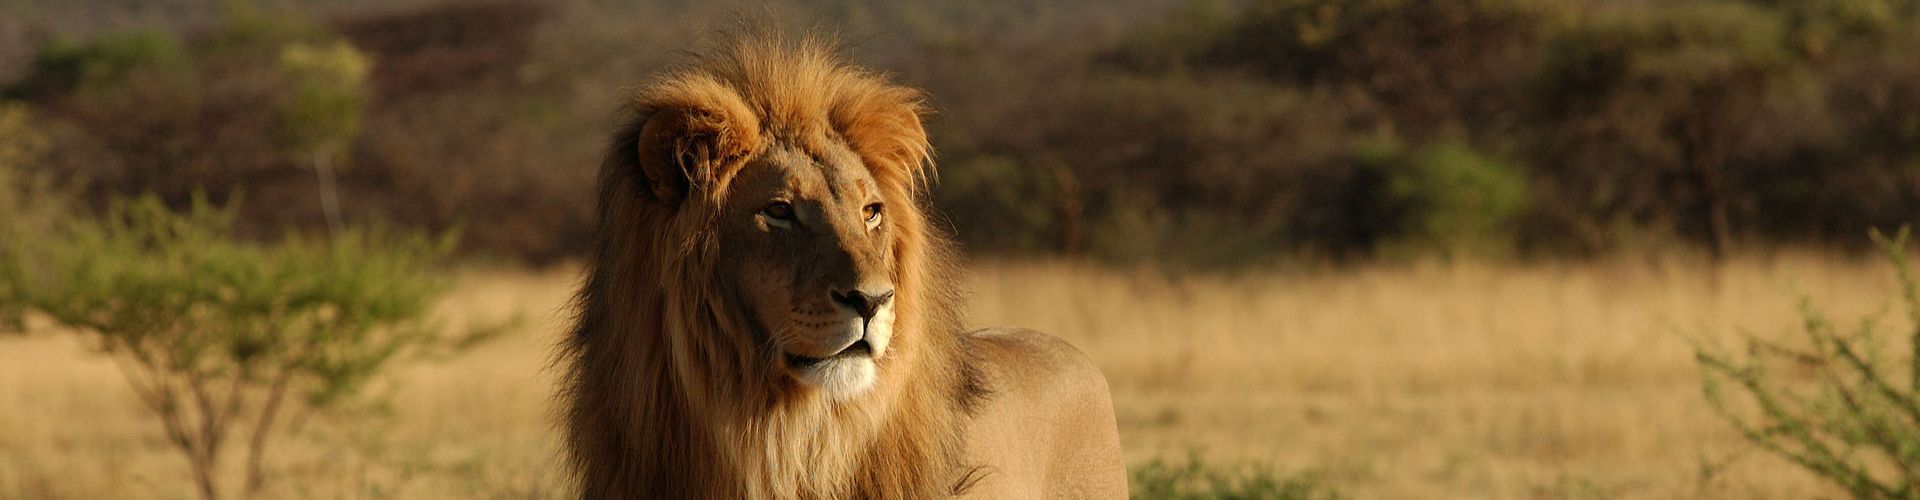 Buchen Sie preiswerte Safaris, Touren und Tansania Urlaub mit Shemeji Safari!